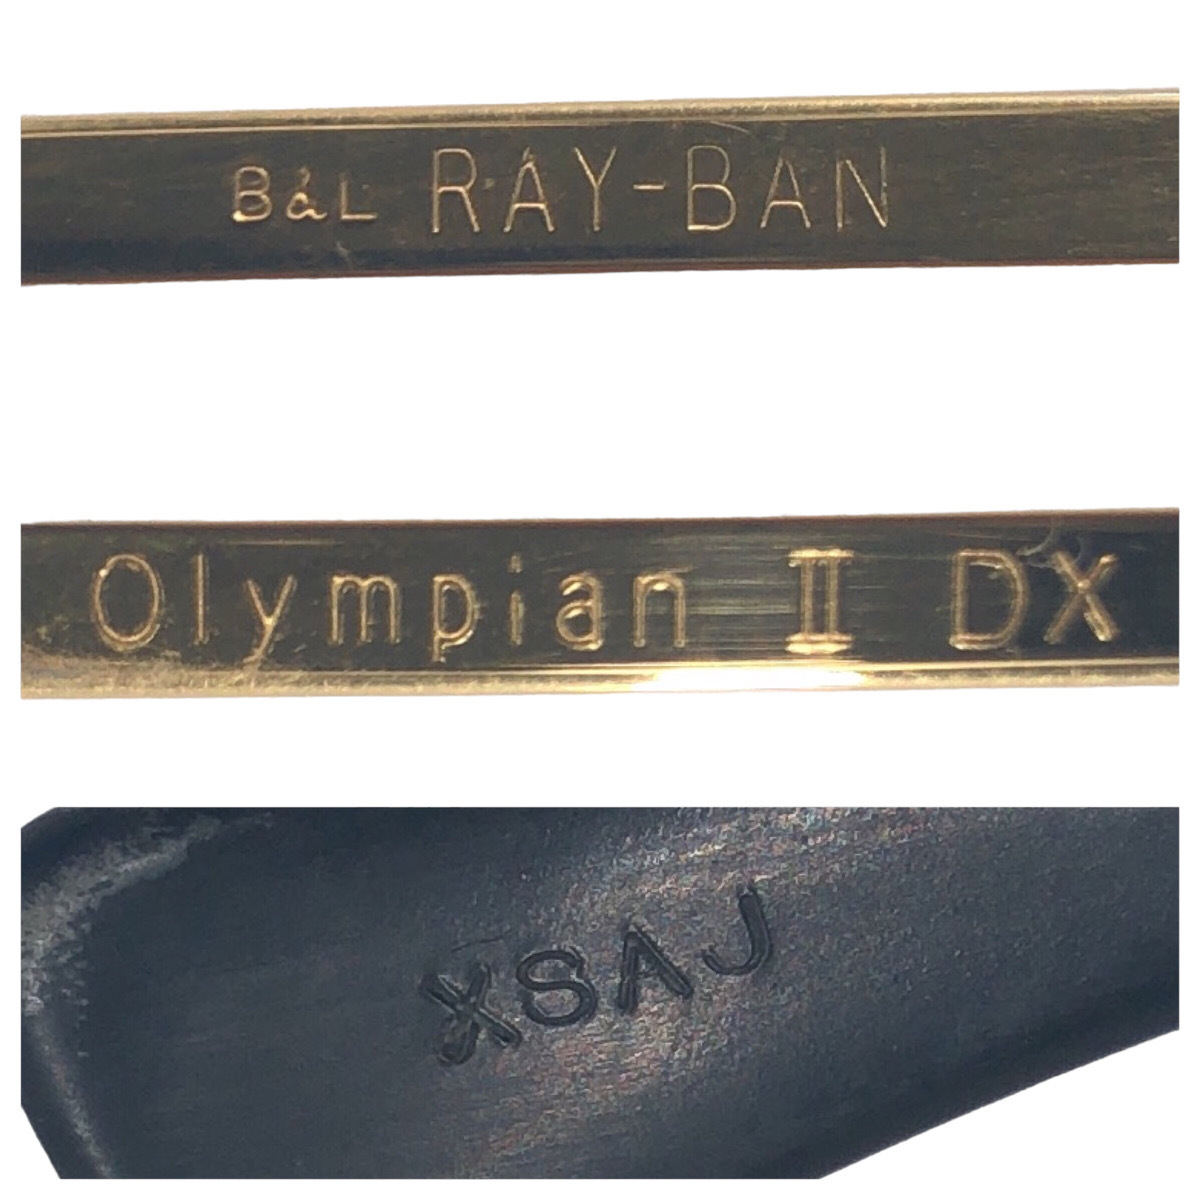 Ray-Ban レイバン B&L RAY-BAN Olympian II DX ゴールド 金 グリーン 緑 メタル サングラス メンズ 403755_画像7